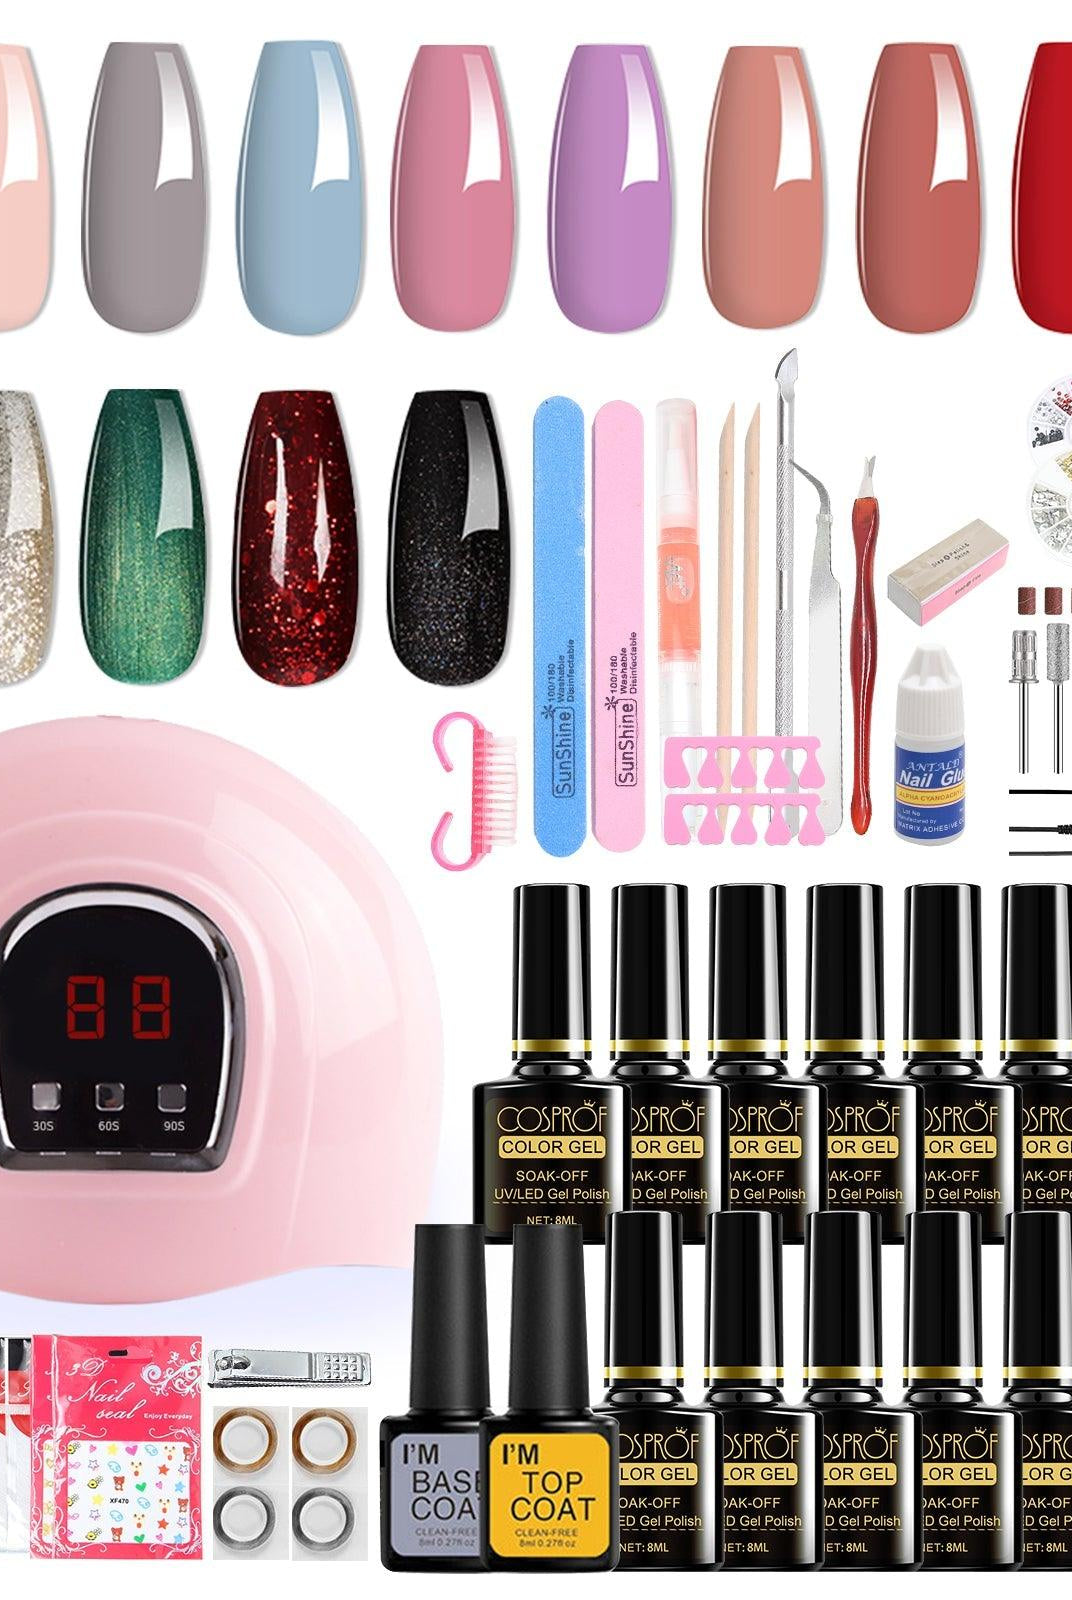 Women's Personal Care - Beauty Nail Polish Salon Diy Home Gel 6-In-1 Nail Drill Bit Set